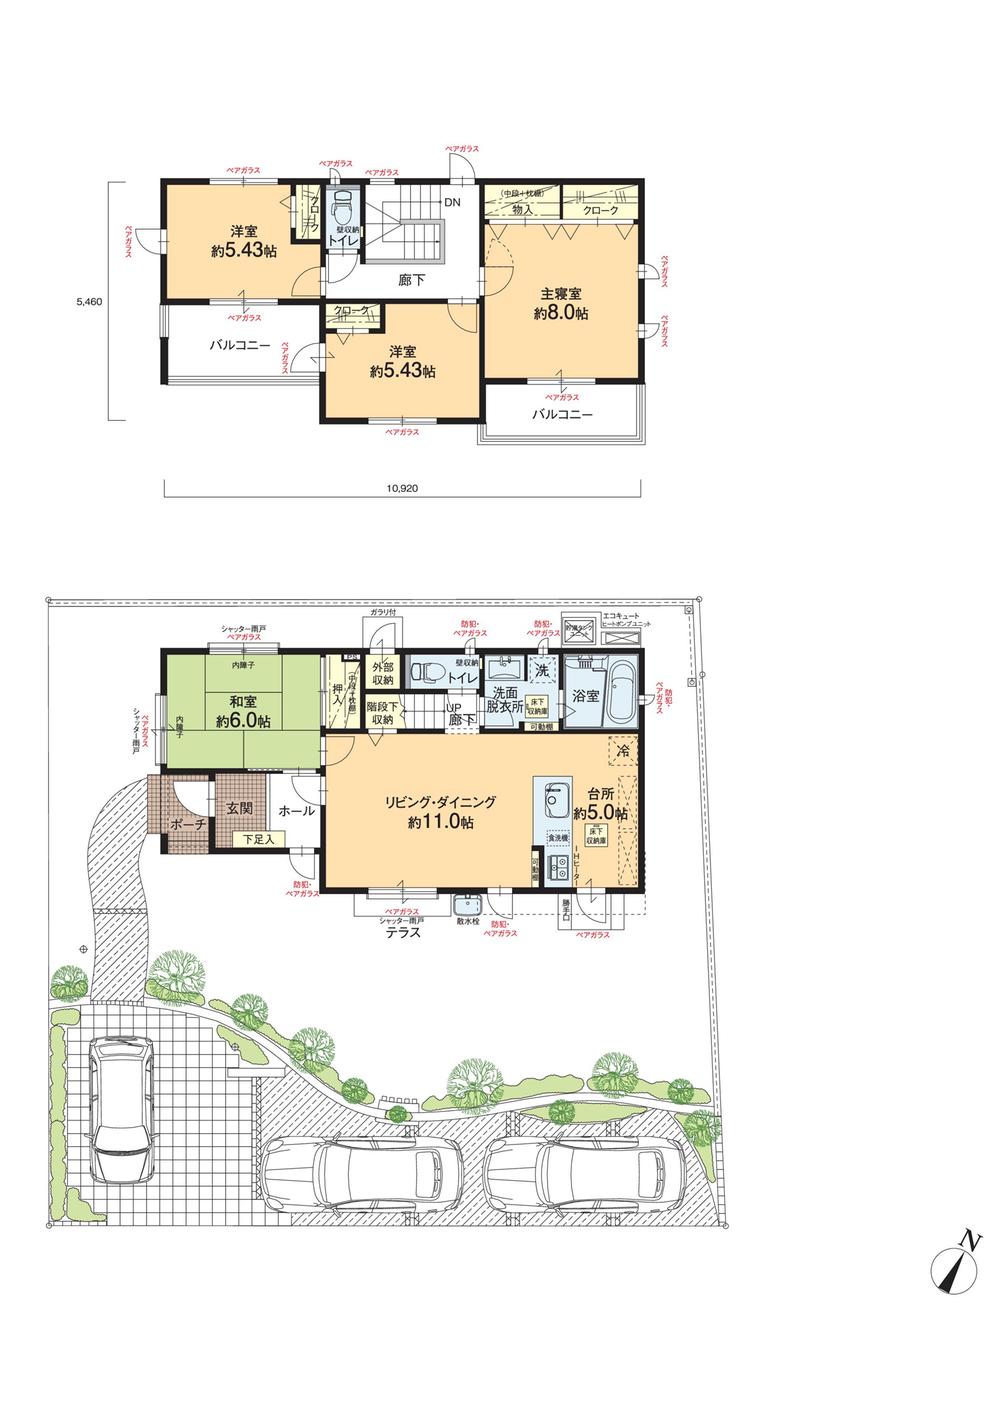 Floor plan. Tsukinoura to kindergarten 810m walk 11 minutes